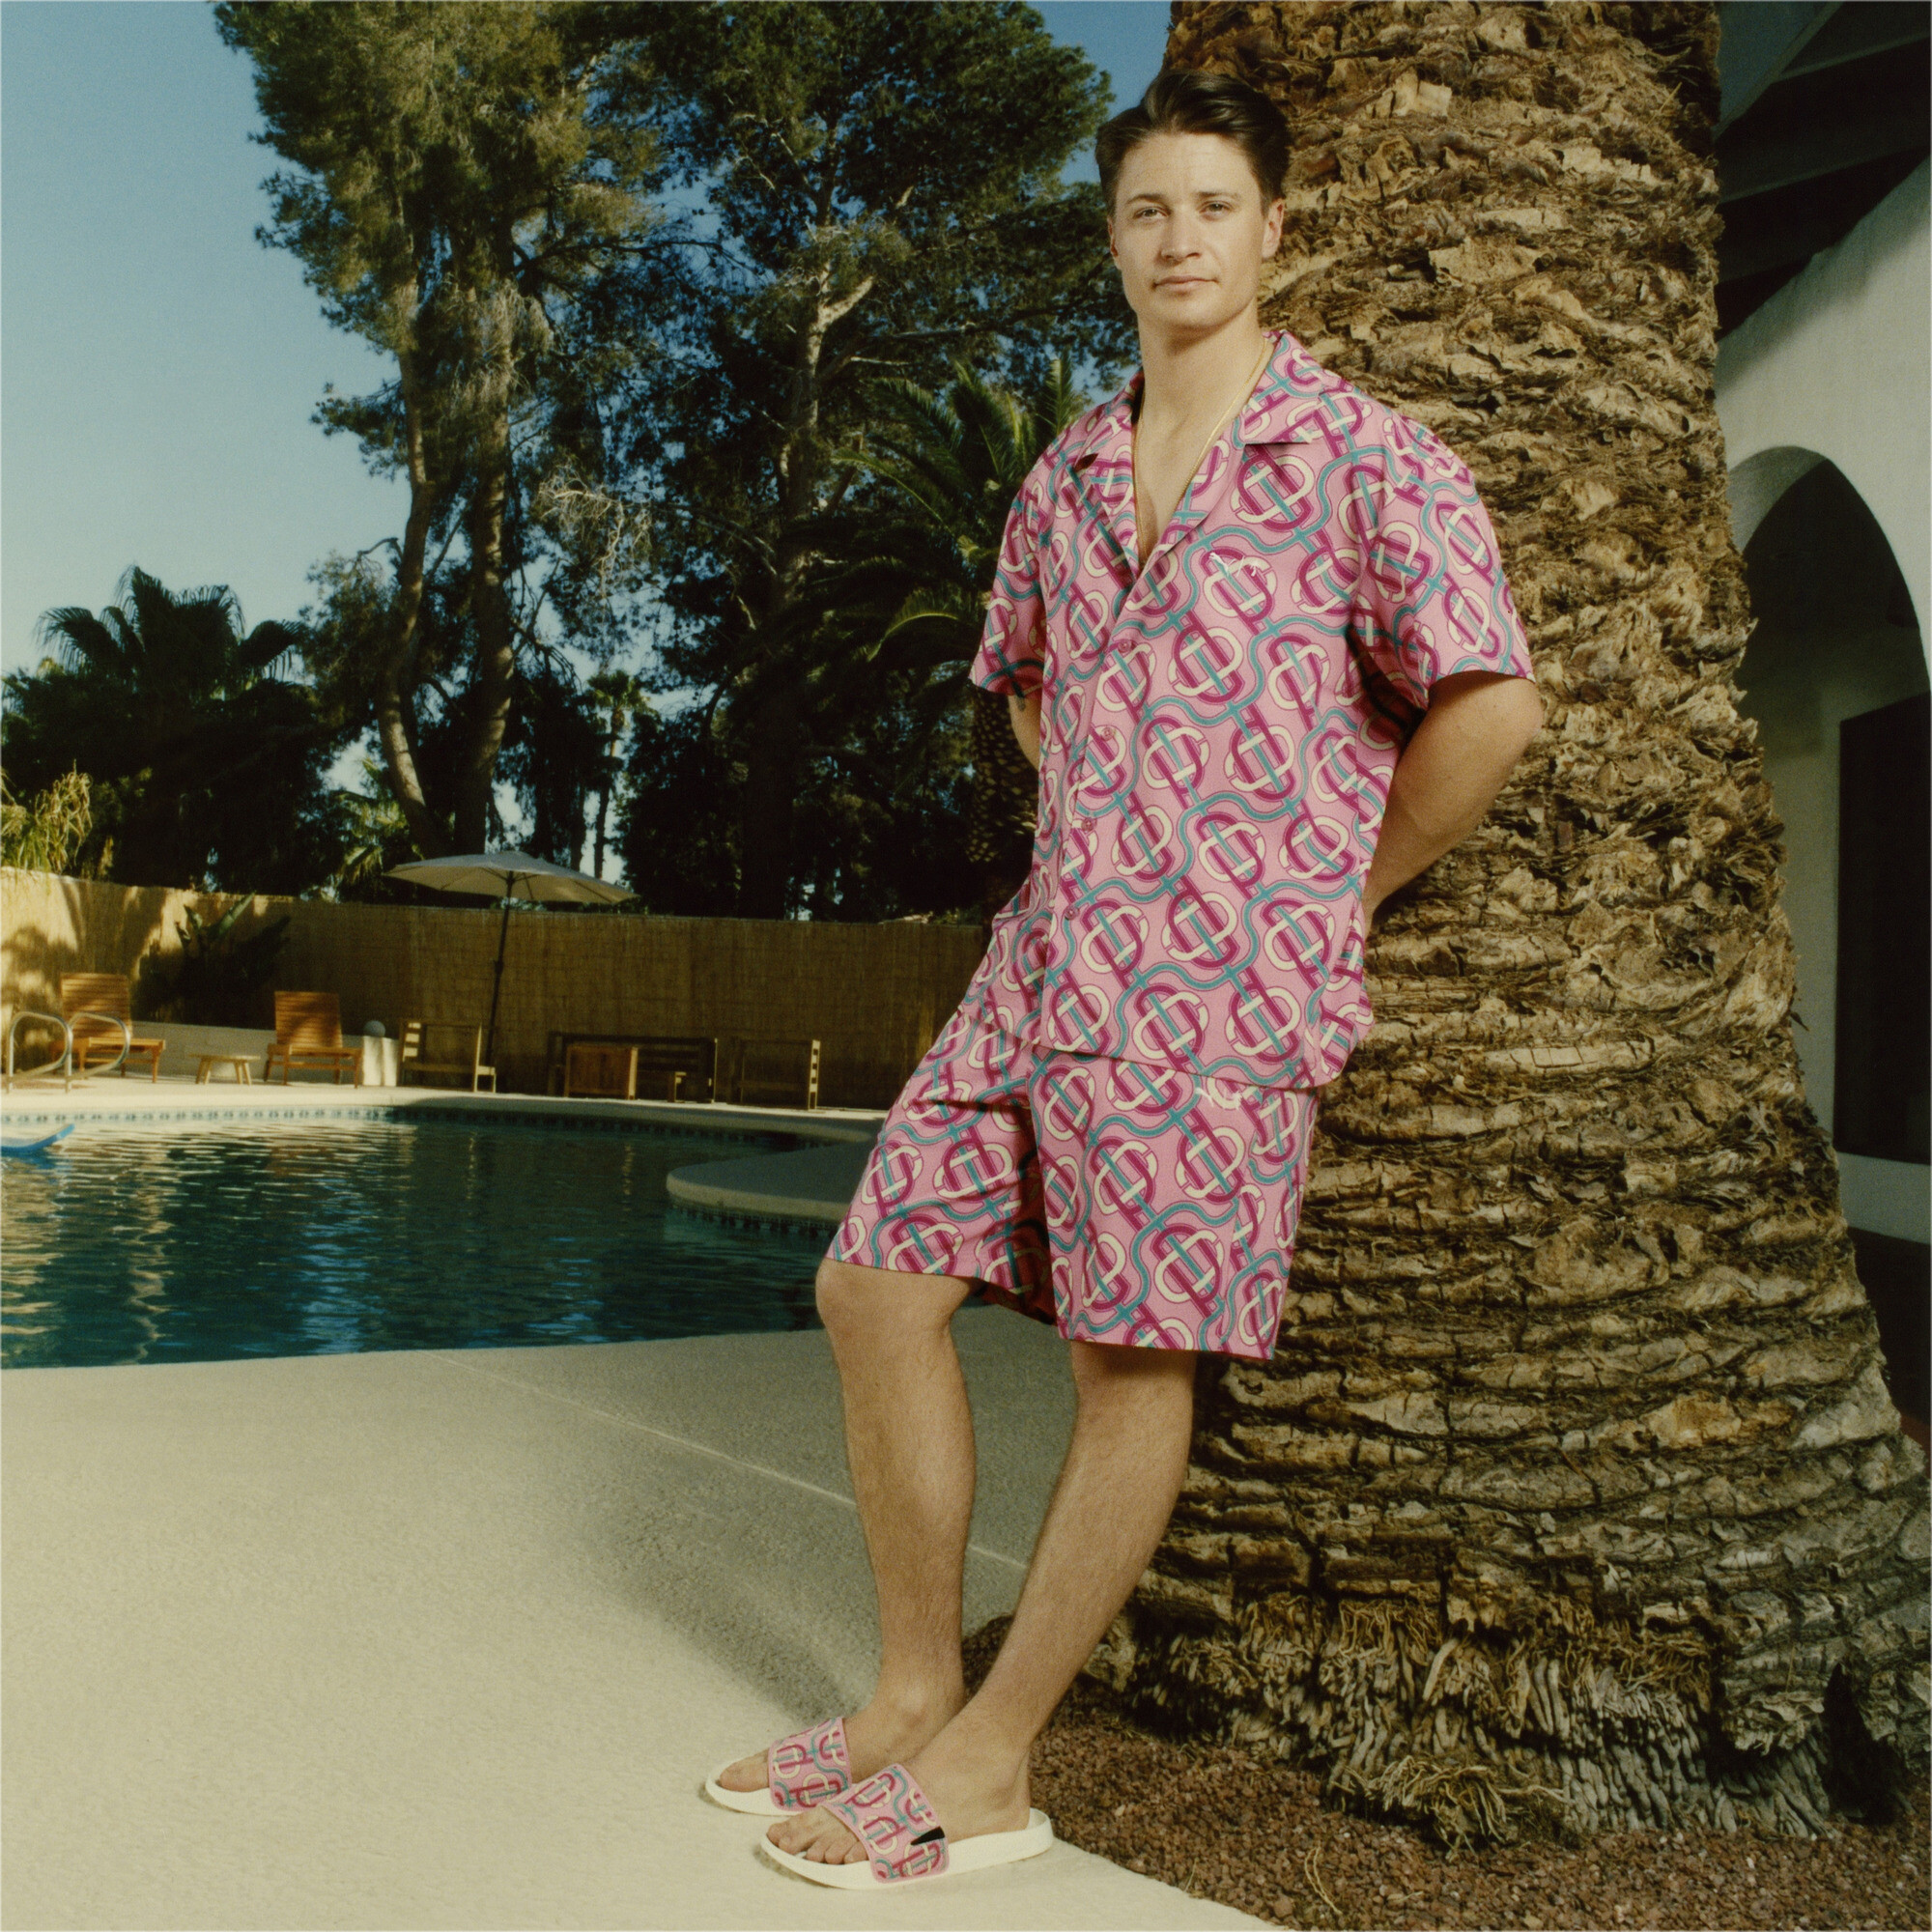 Men's PUMA X PALM TREE CREW Shorts In 70 - Pink, Size 2XL